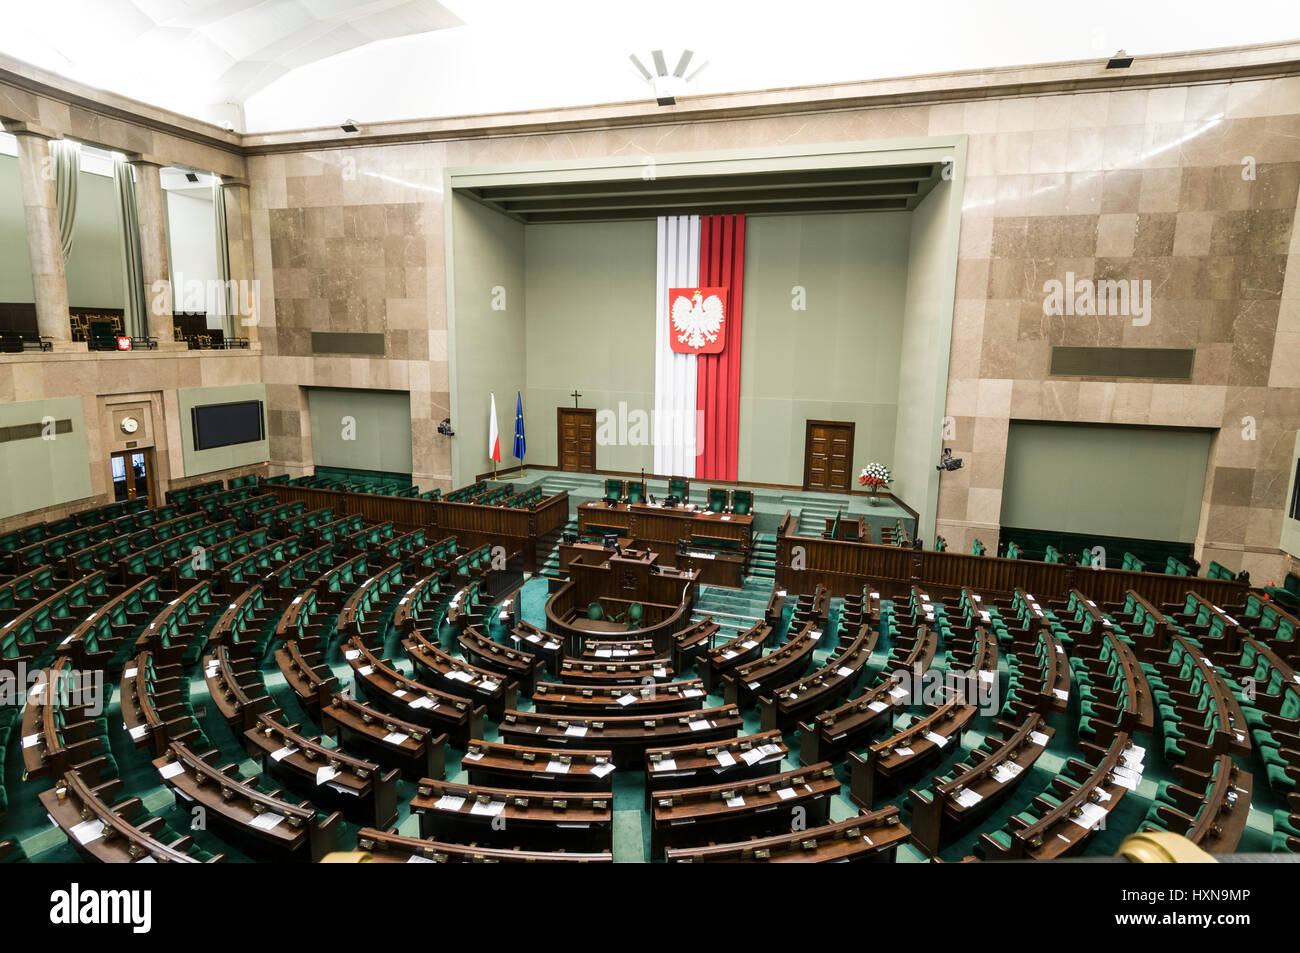 The Polish Sejim Debate Hall  of the Polish Parliament in Warsaw, Poland. Stock Photo